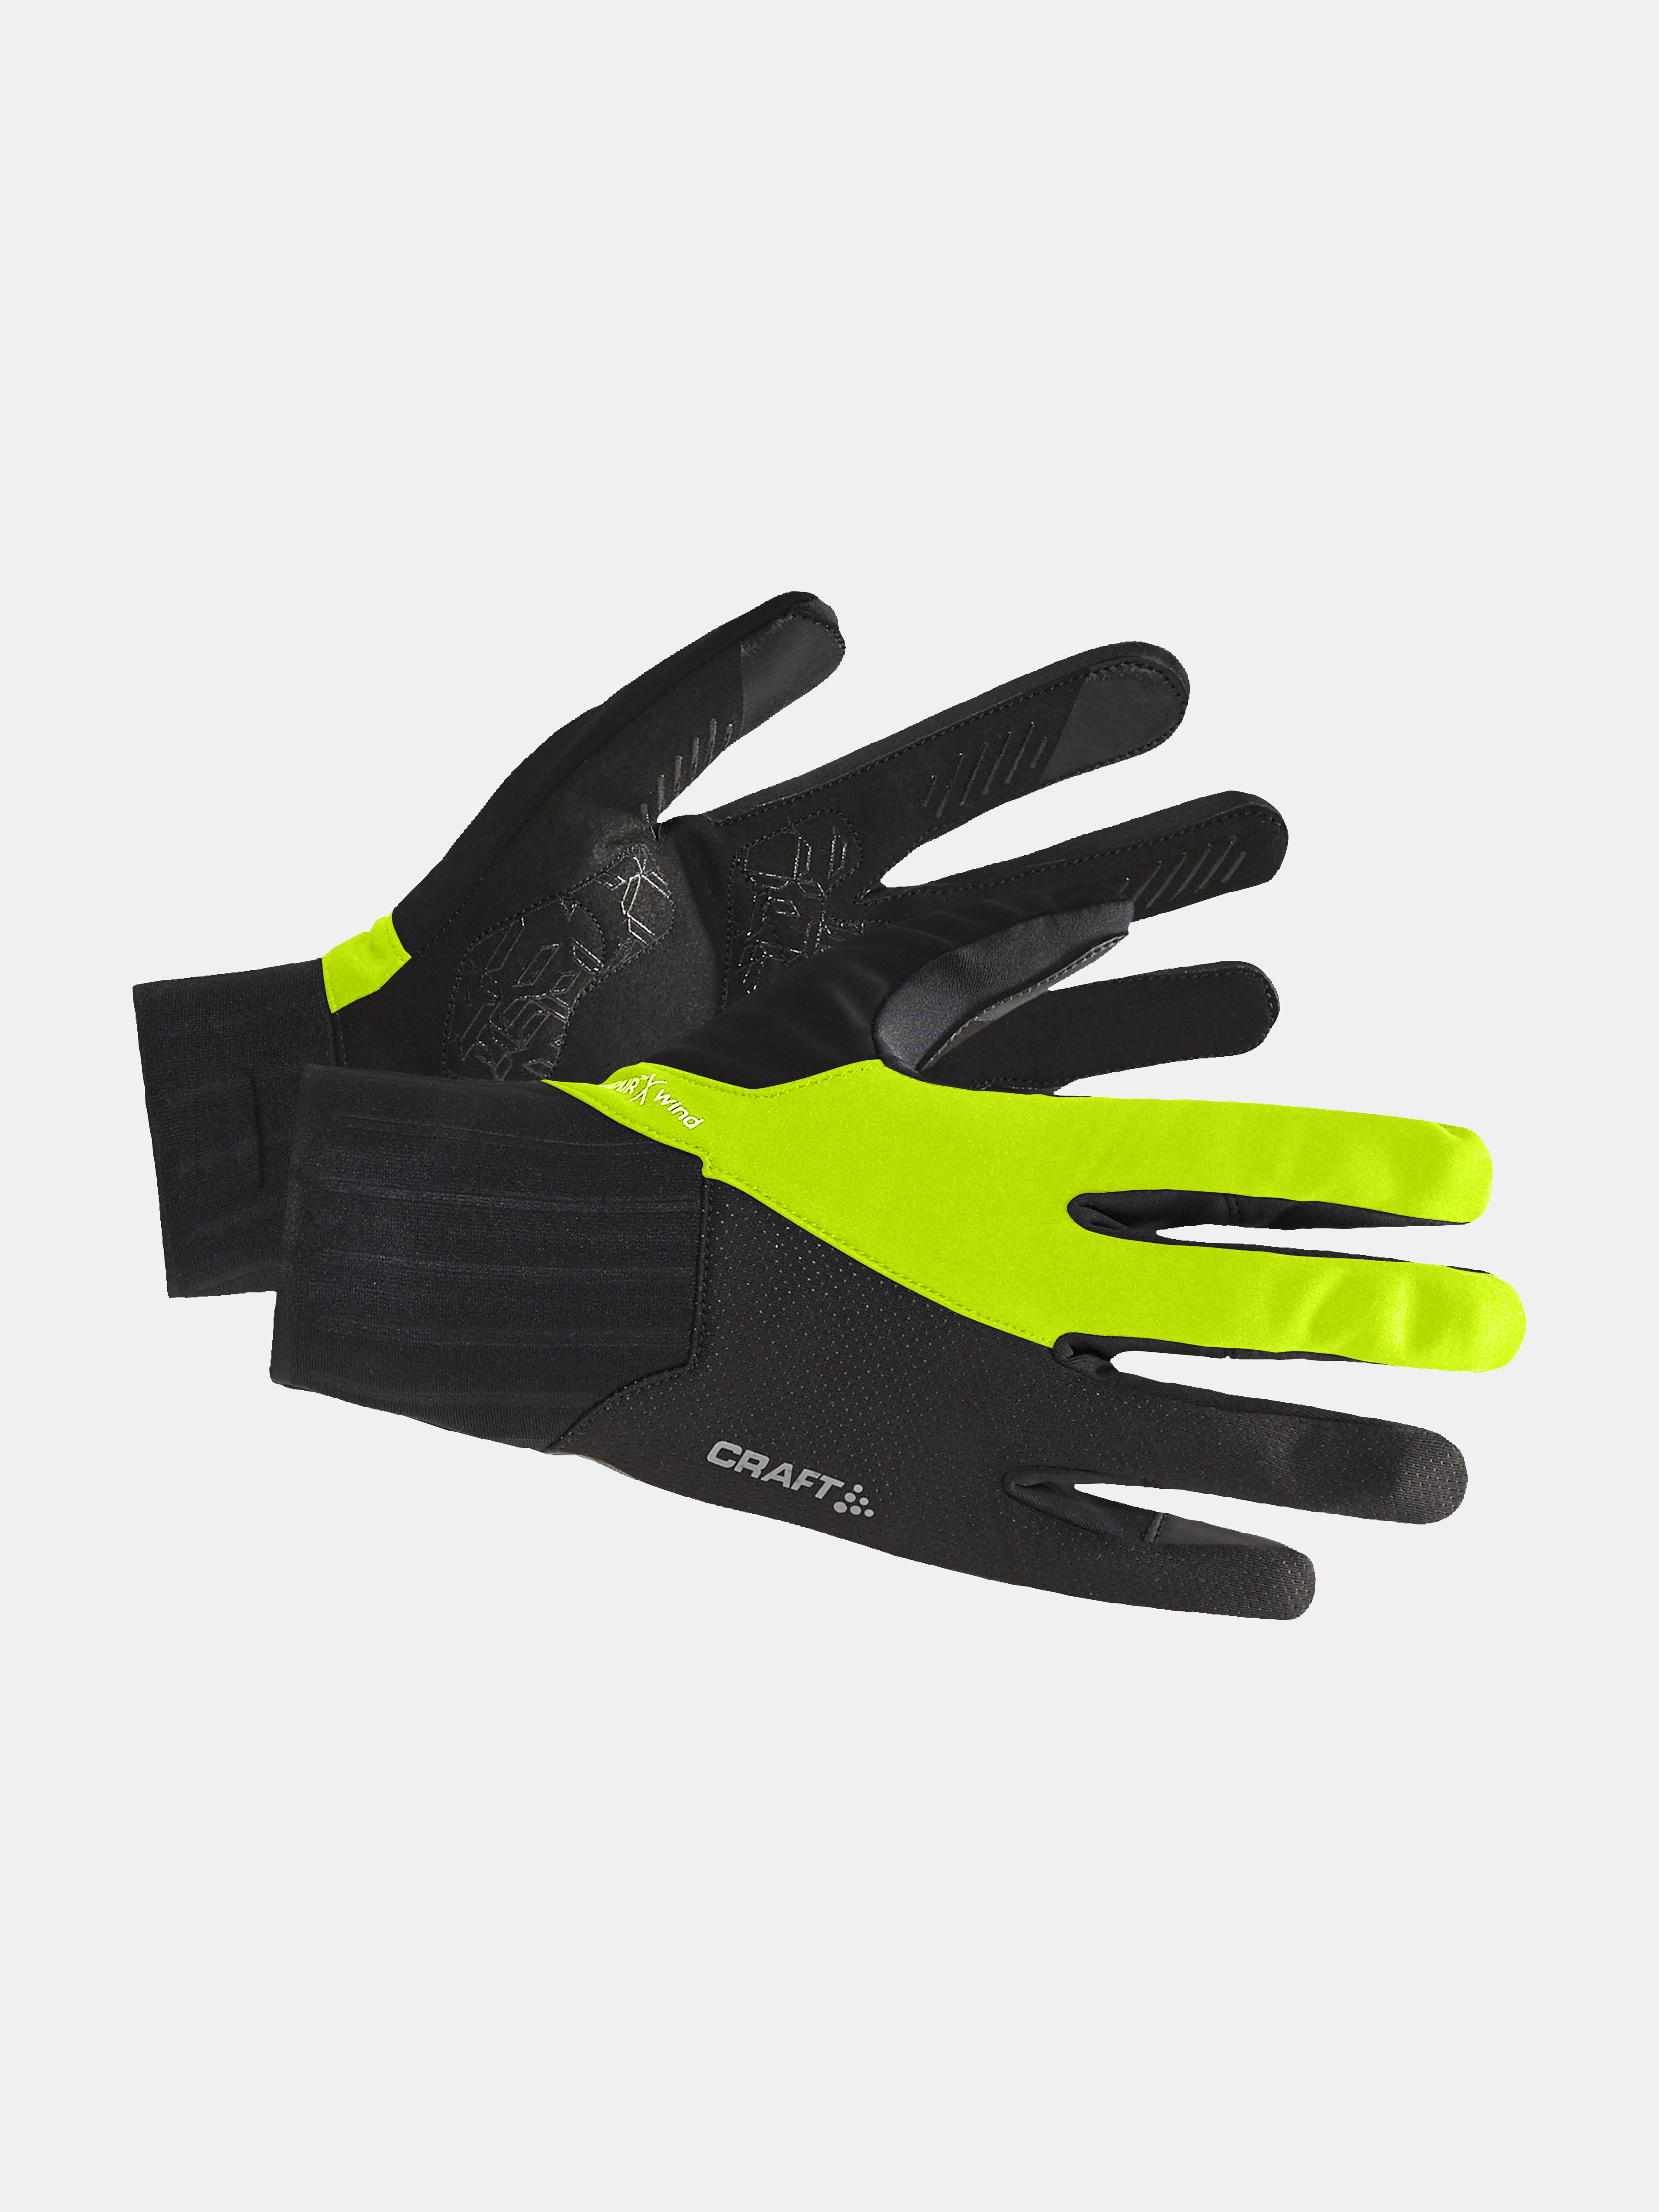 ADV SubZ All Weather Glove - Black | Craft Sportswear